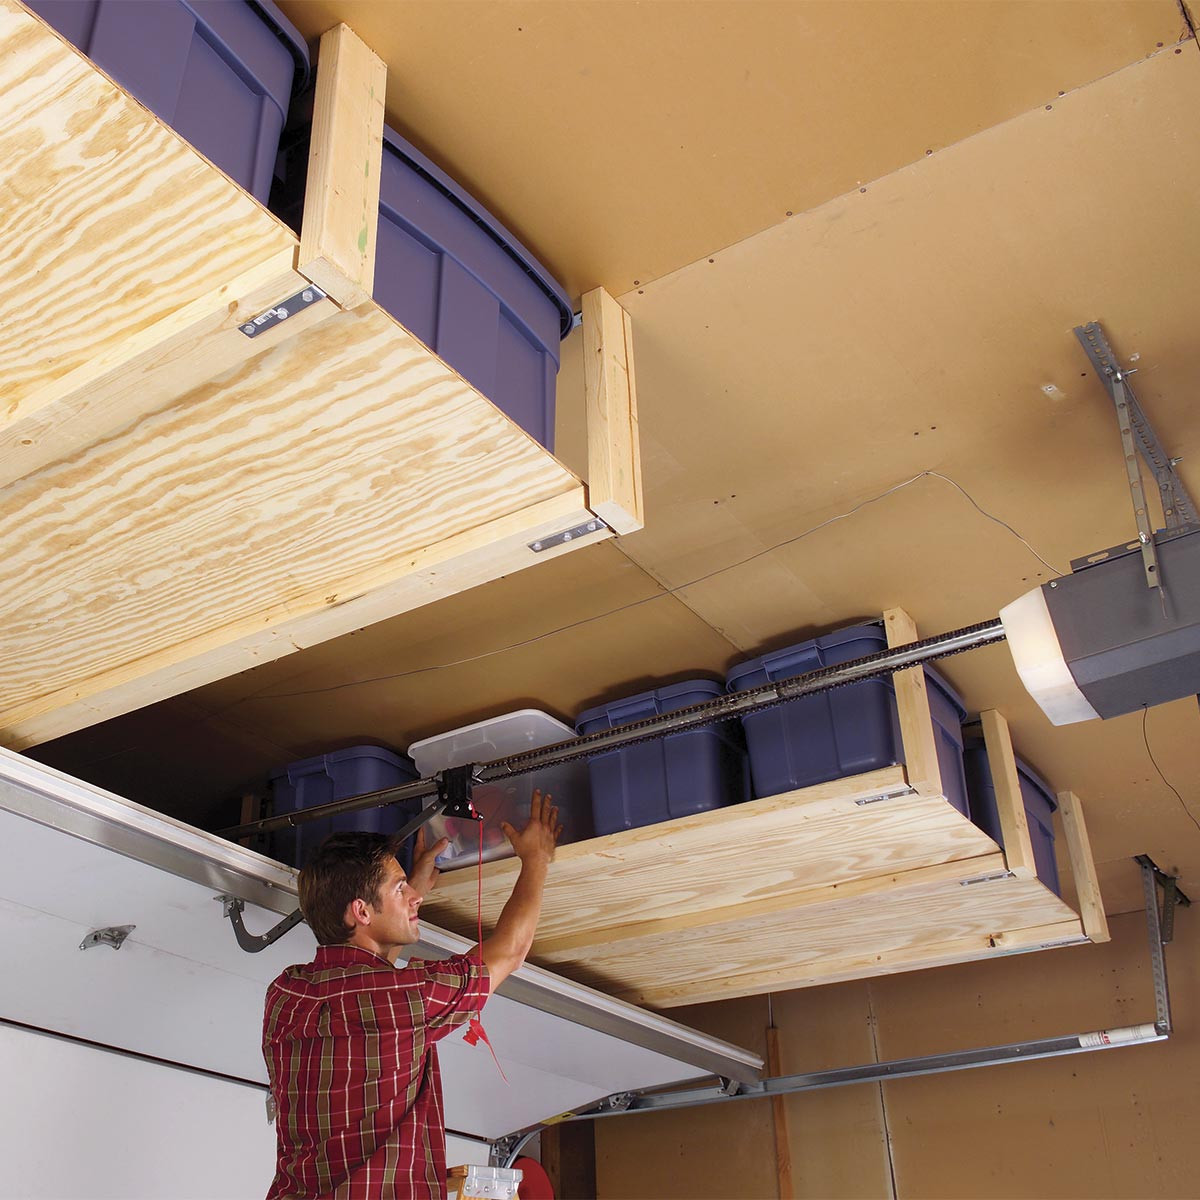 DIY Overhead Garage Storage Plans
 24 Cheap Garage Storage Projects You Can DIY